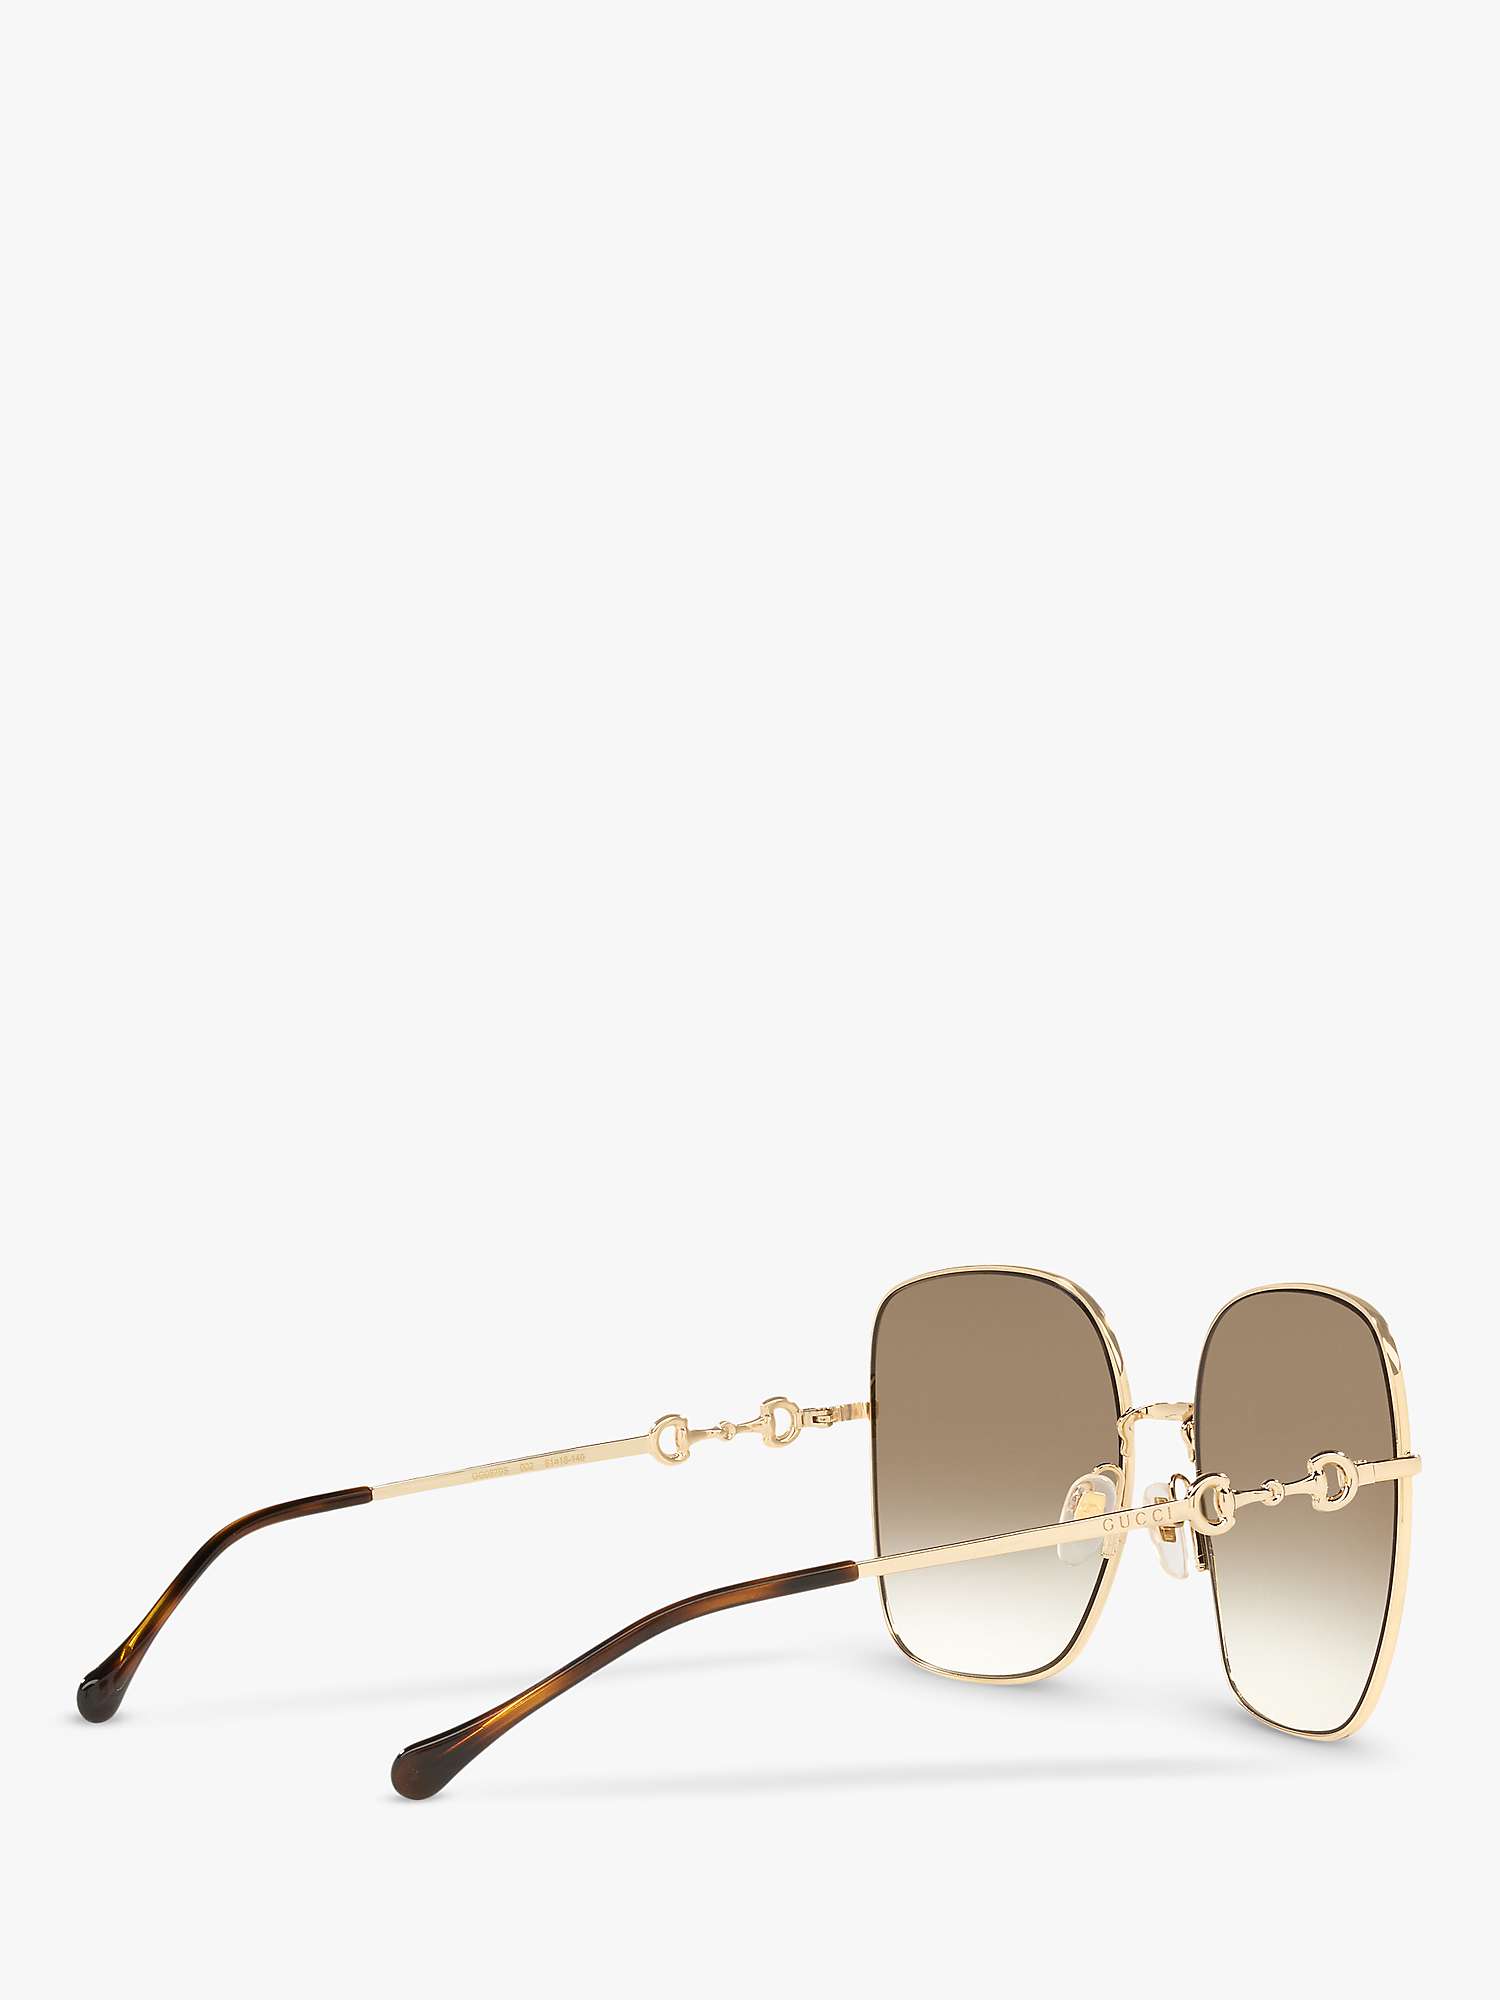 Gucci GG0879S Women's Square Sunglasses, Gold/Brown Gradient at John ...